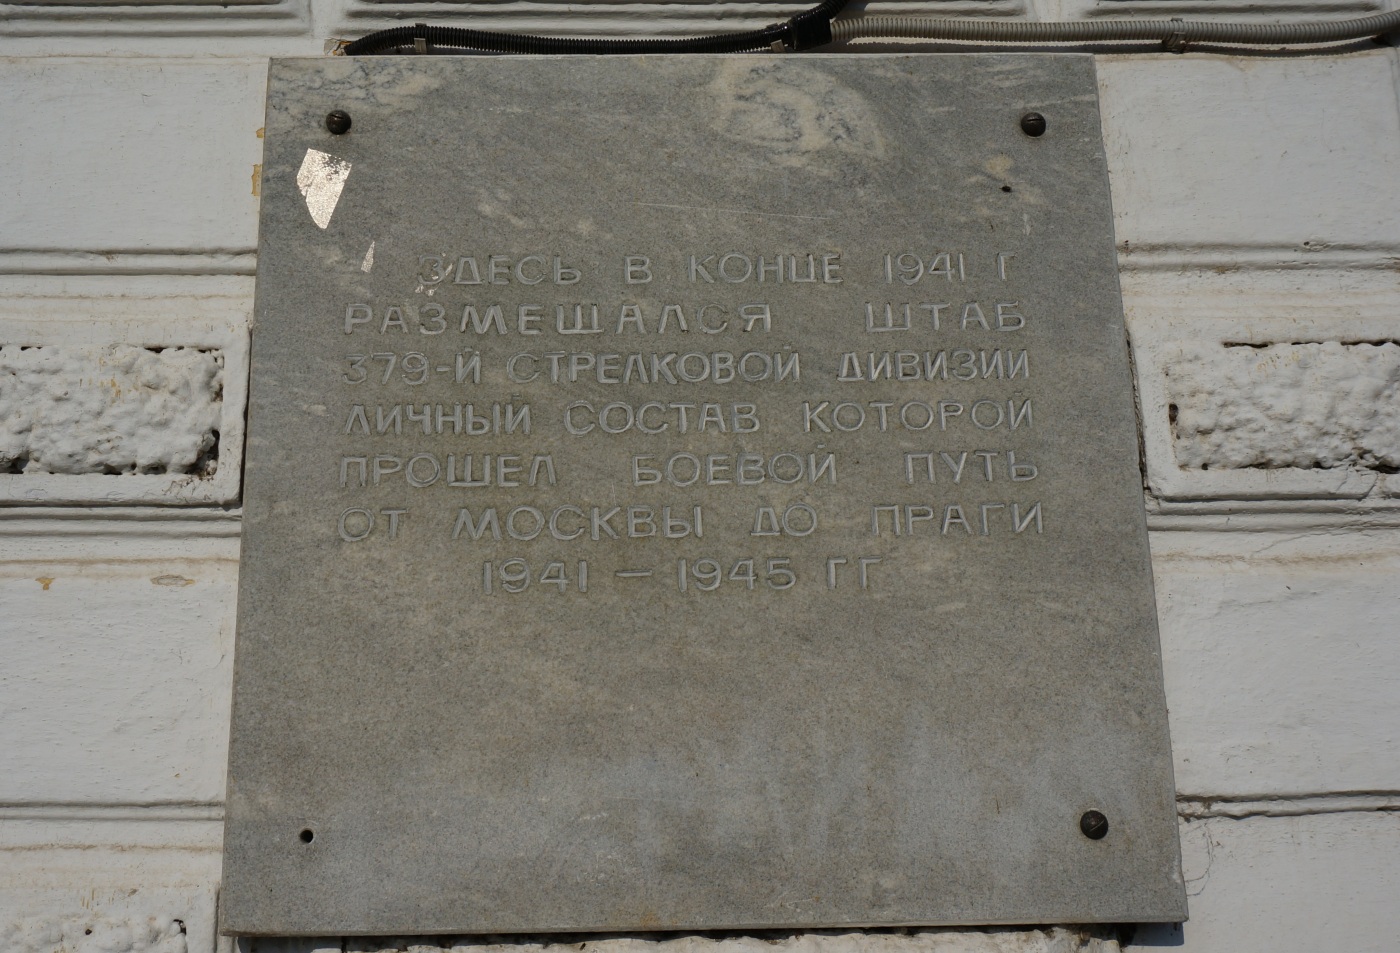 Kungur, Улица Карла Маркса, 3. Kungur — Memorial plaques